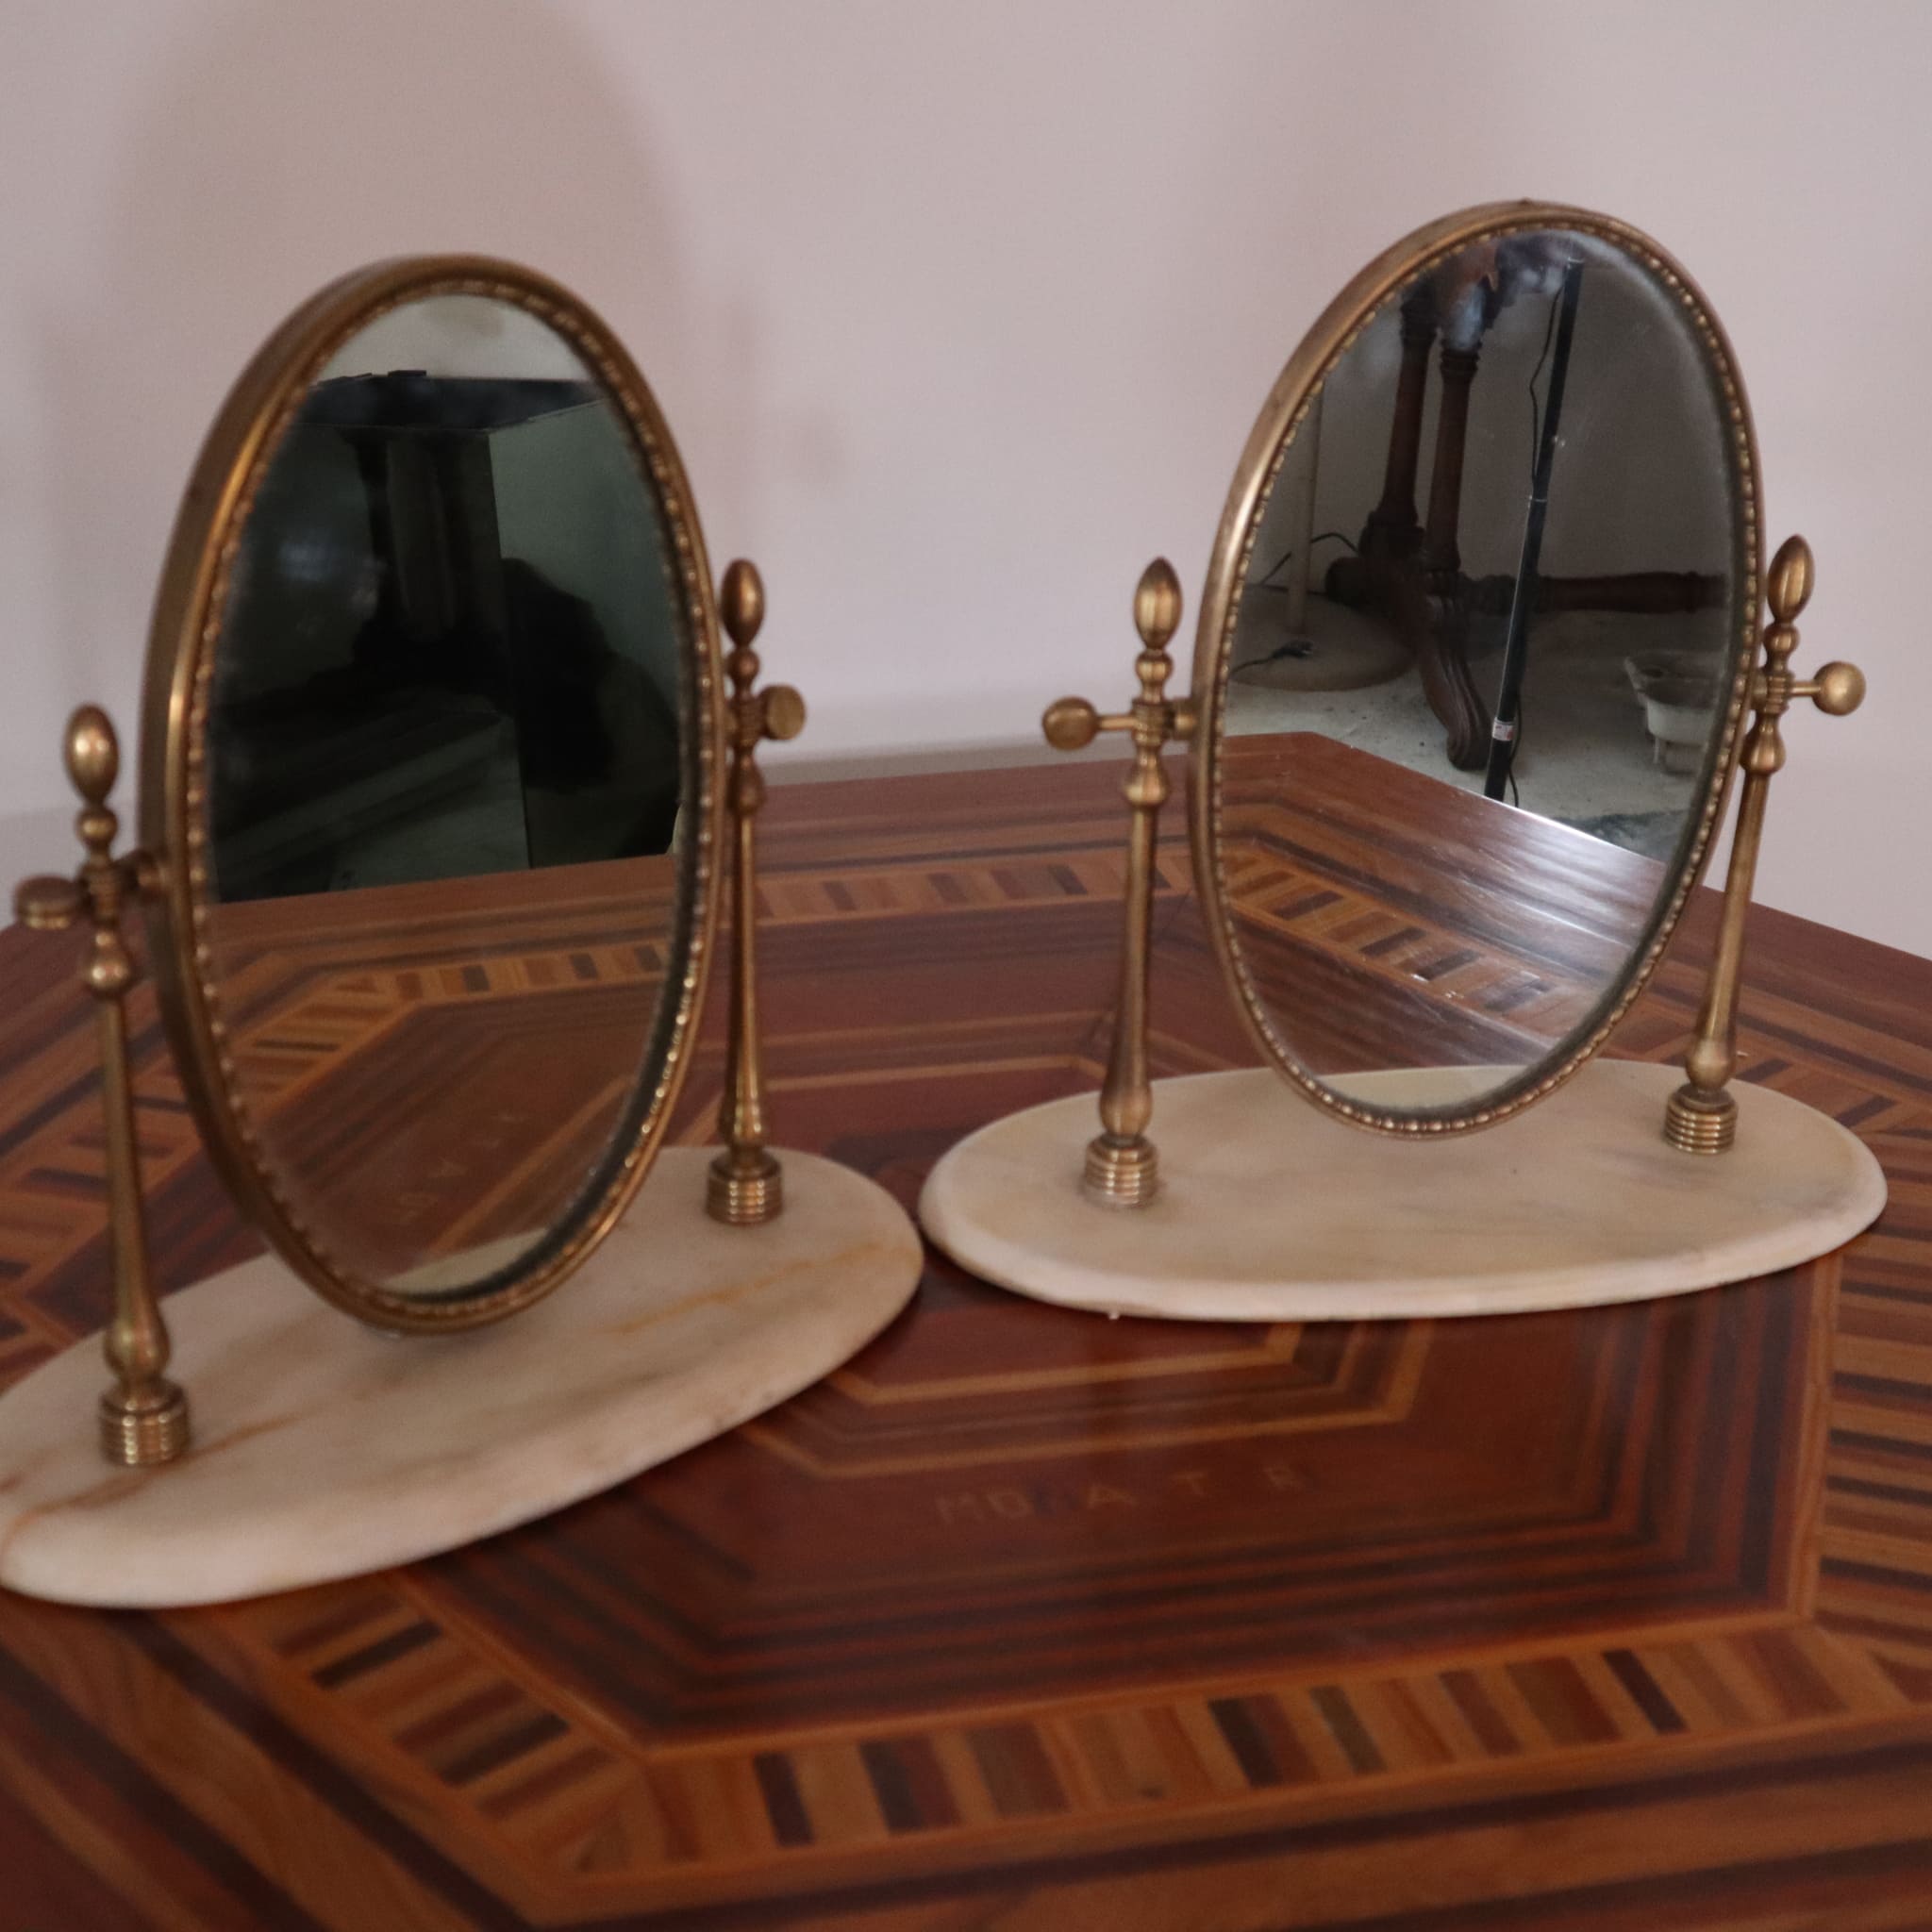 visionidepoca-visioni-depoca-psiche-mirror-brass-marble-original-50s-made-italy-vintage-modern-antiques-furniture-tilting-1